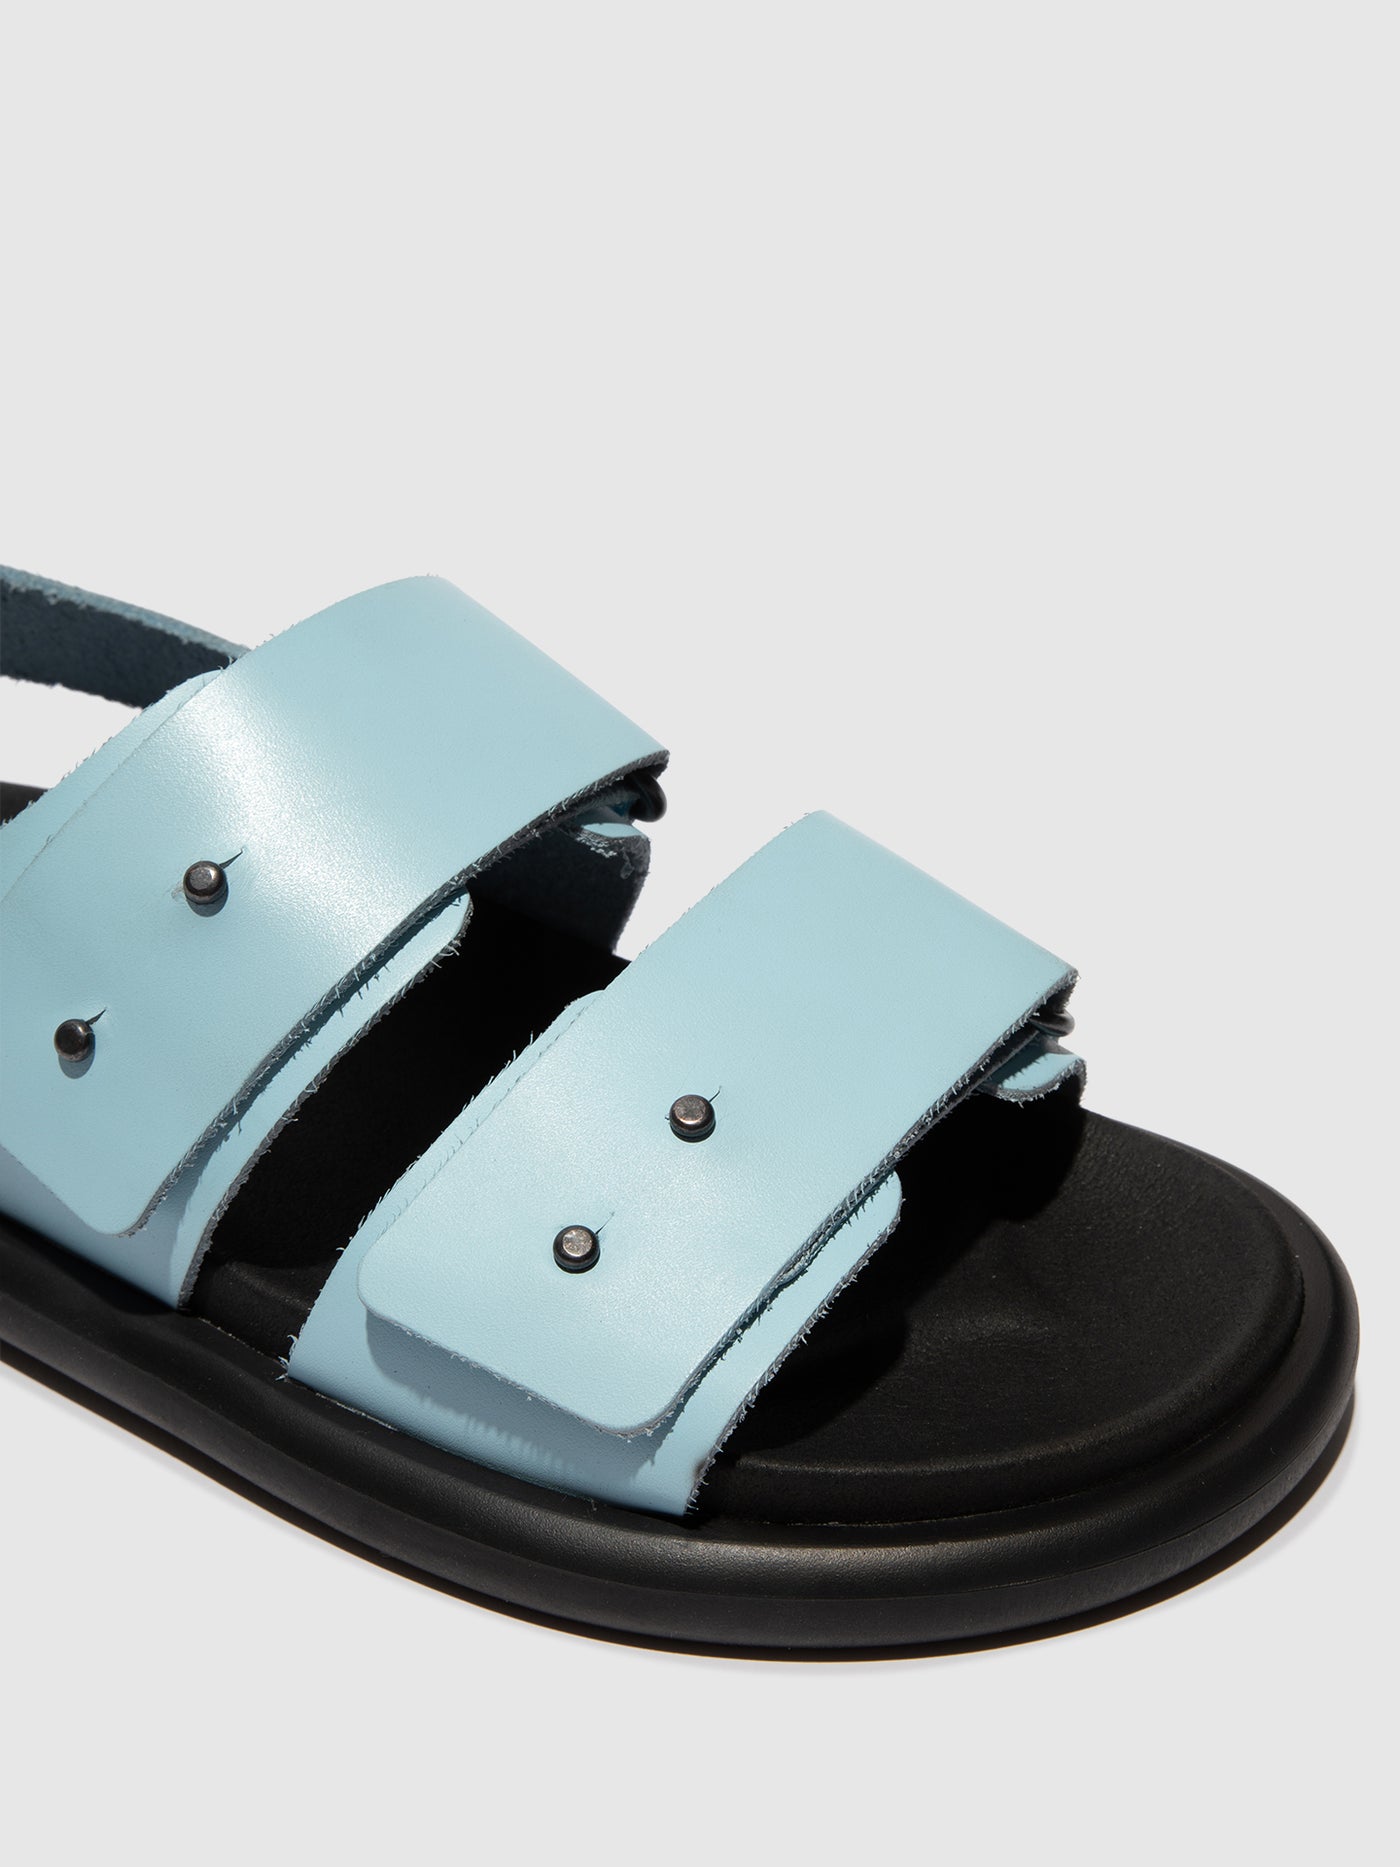 Sling-Back Sandals PAFI070FLY SKY BLUE